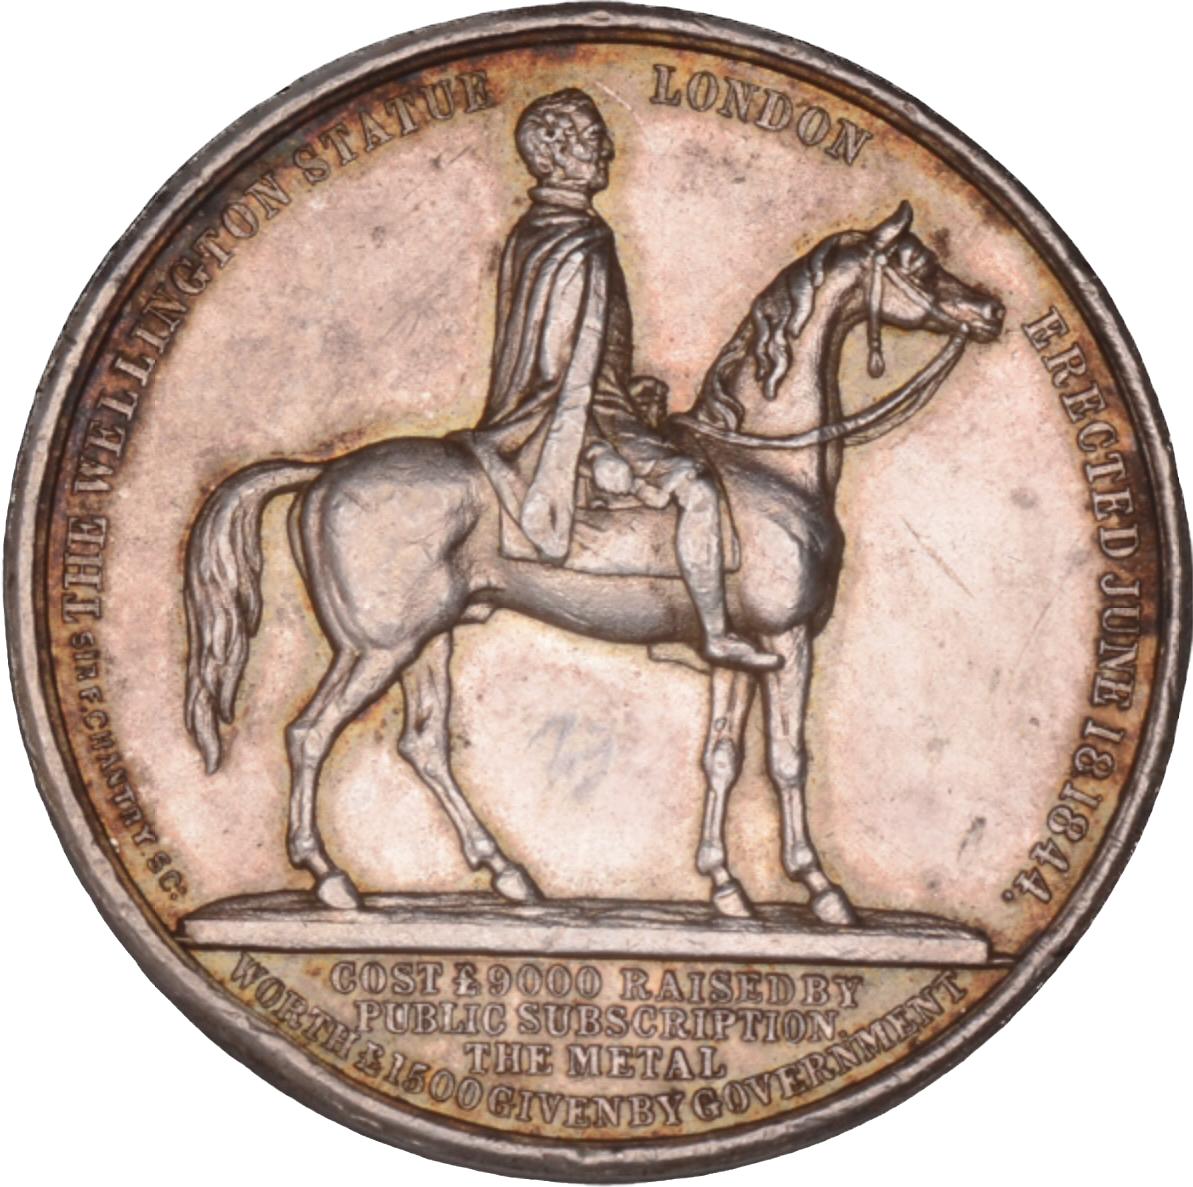 1844 Duke of Wellington, Equestrian Statue 39mm white metal medal BHM 2192